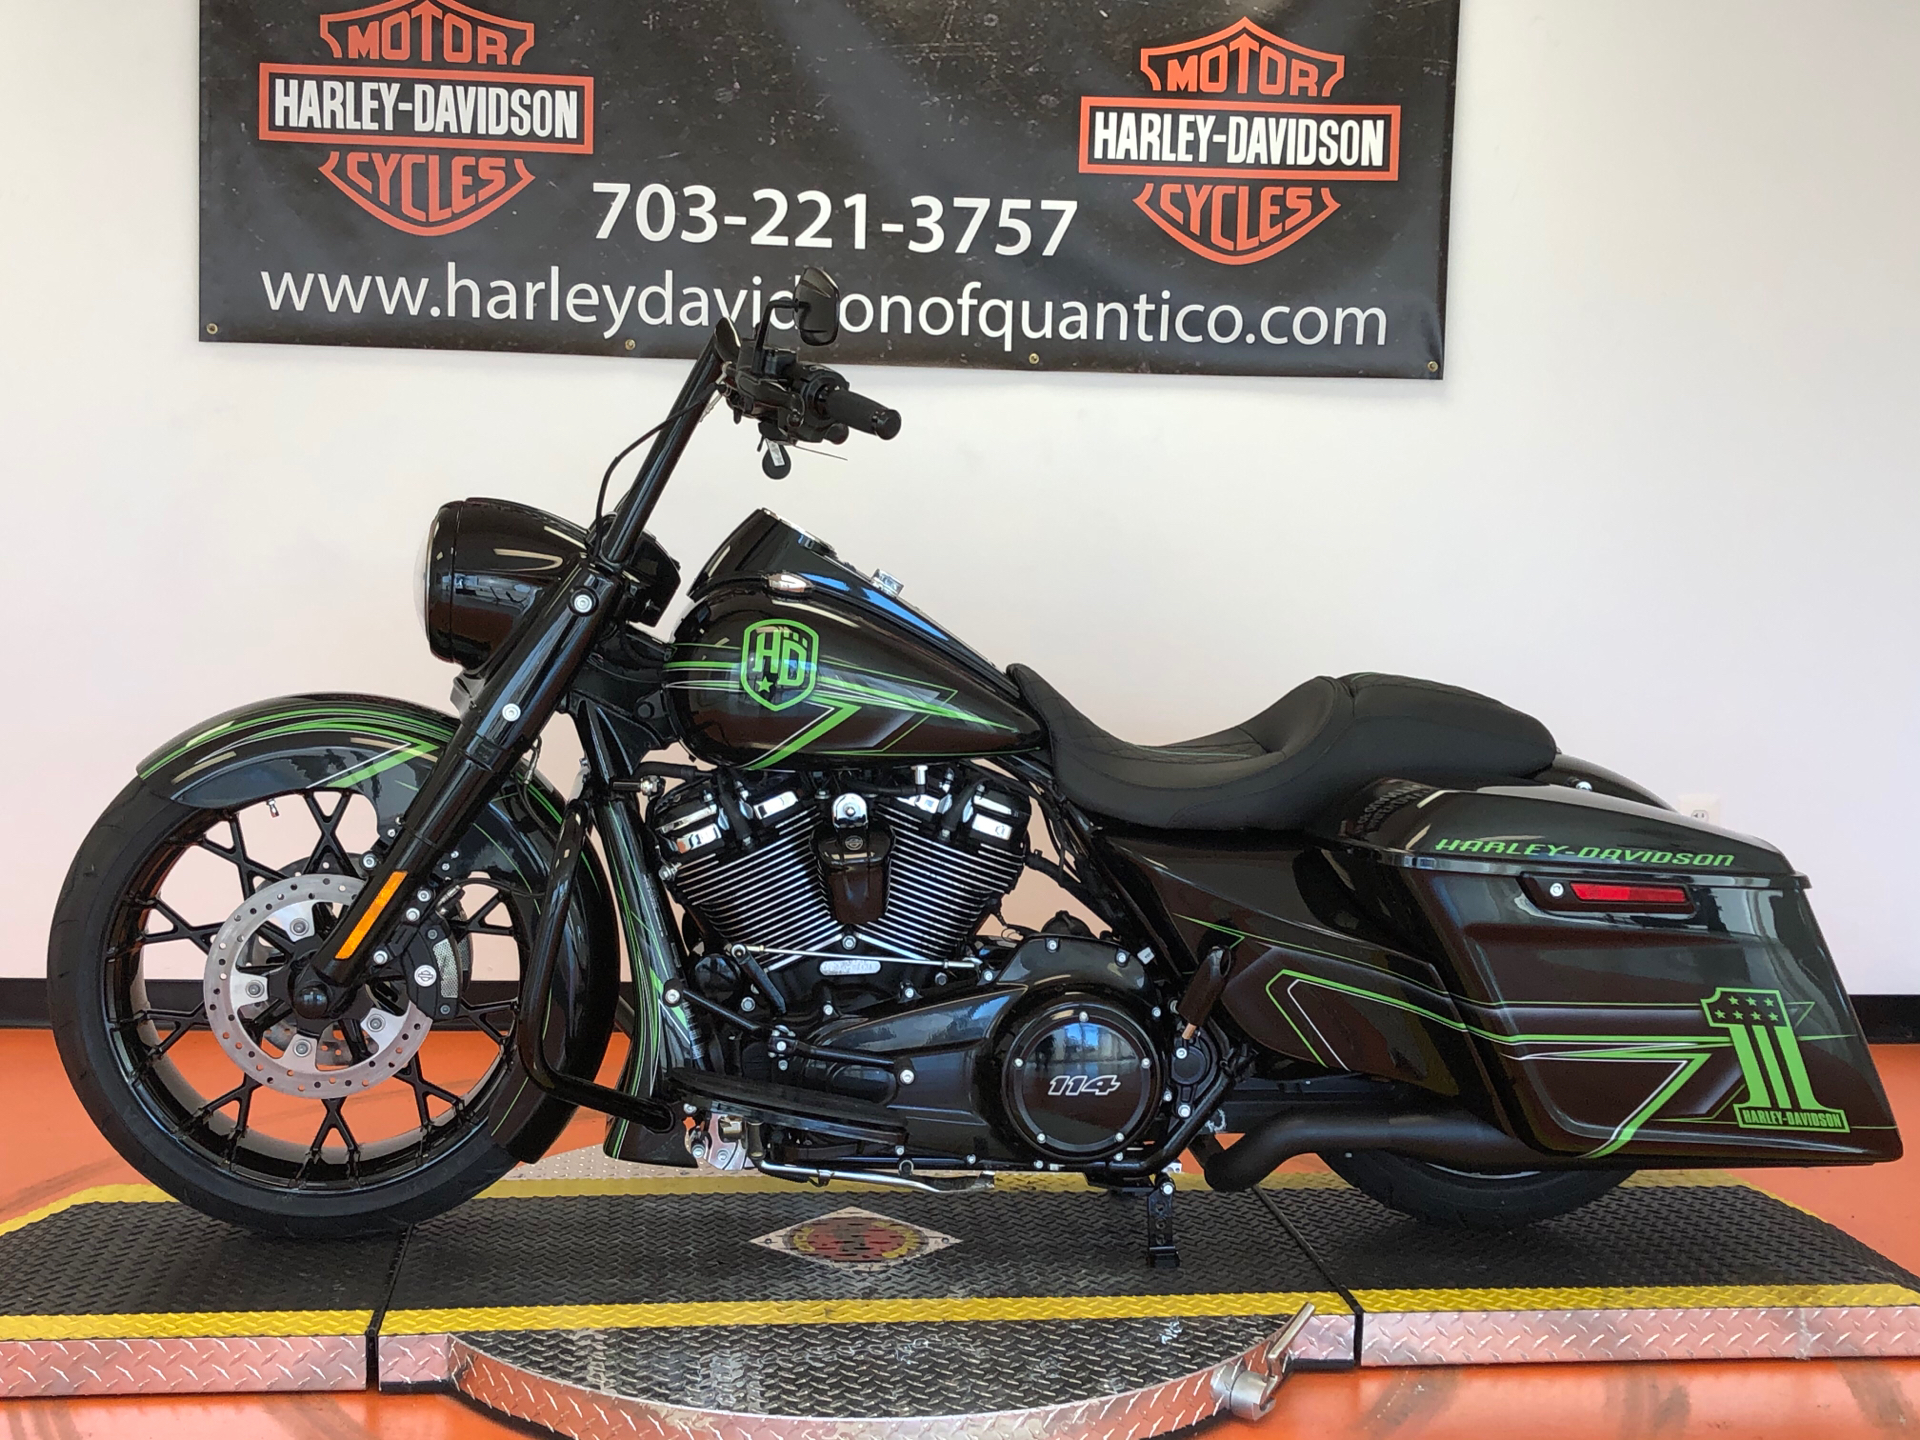 Used 2019 Harley Davidson Road King Special Quantico Custom 1 Of 1 Mean Green Motorcycles In Orange Va 670343